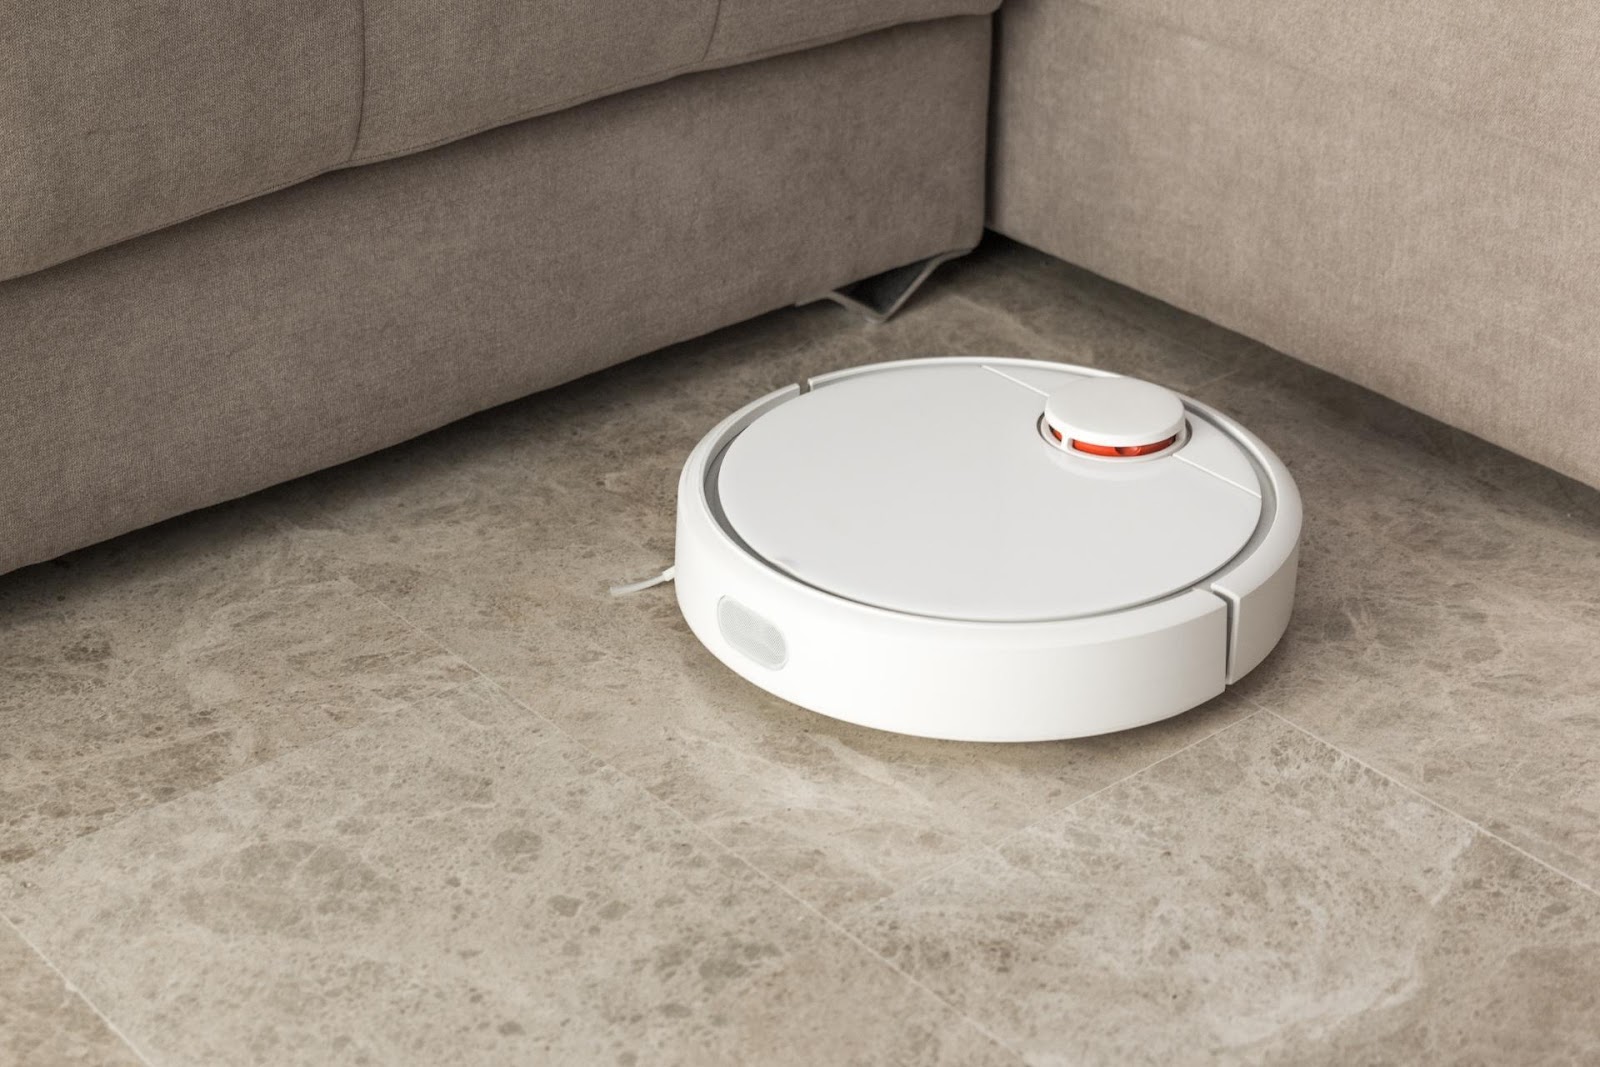 How Do Robot Vacuums Navigate Your Home?